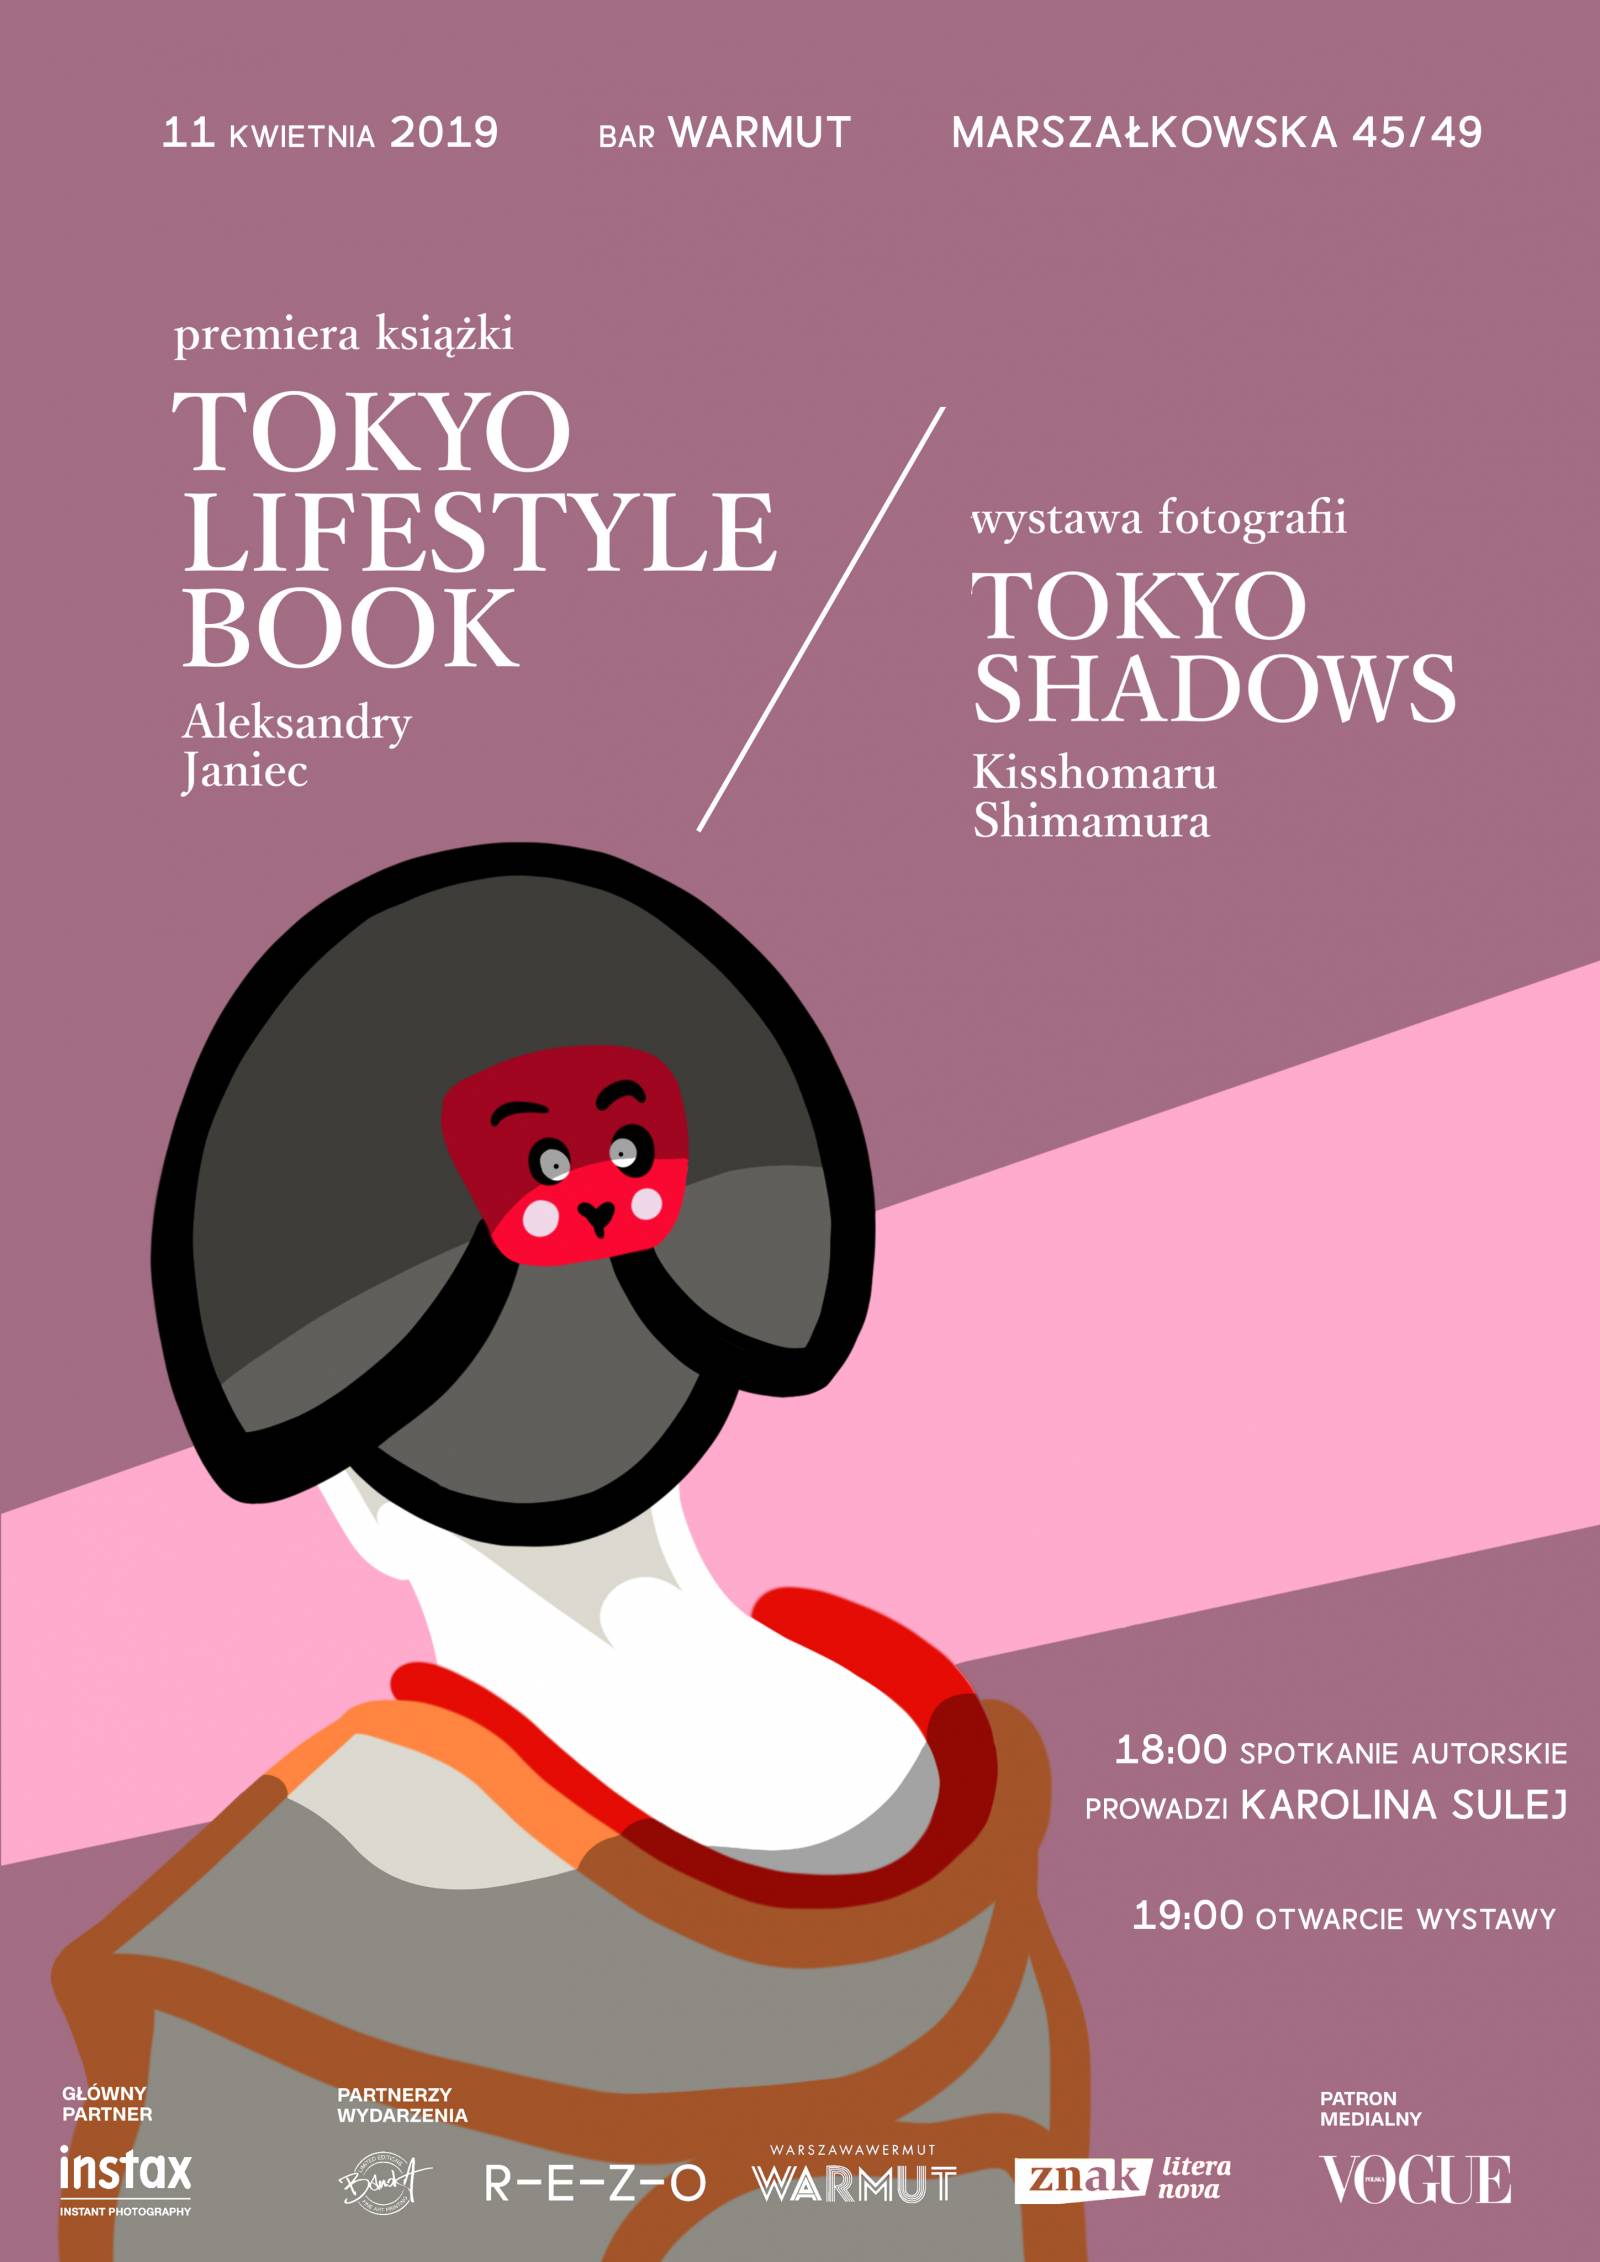 Wystawa fotografii „Tokyo Shadows”